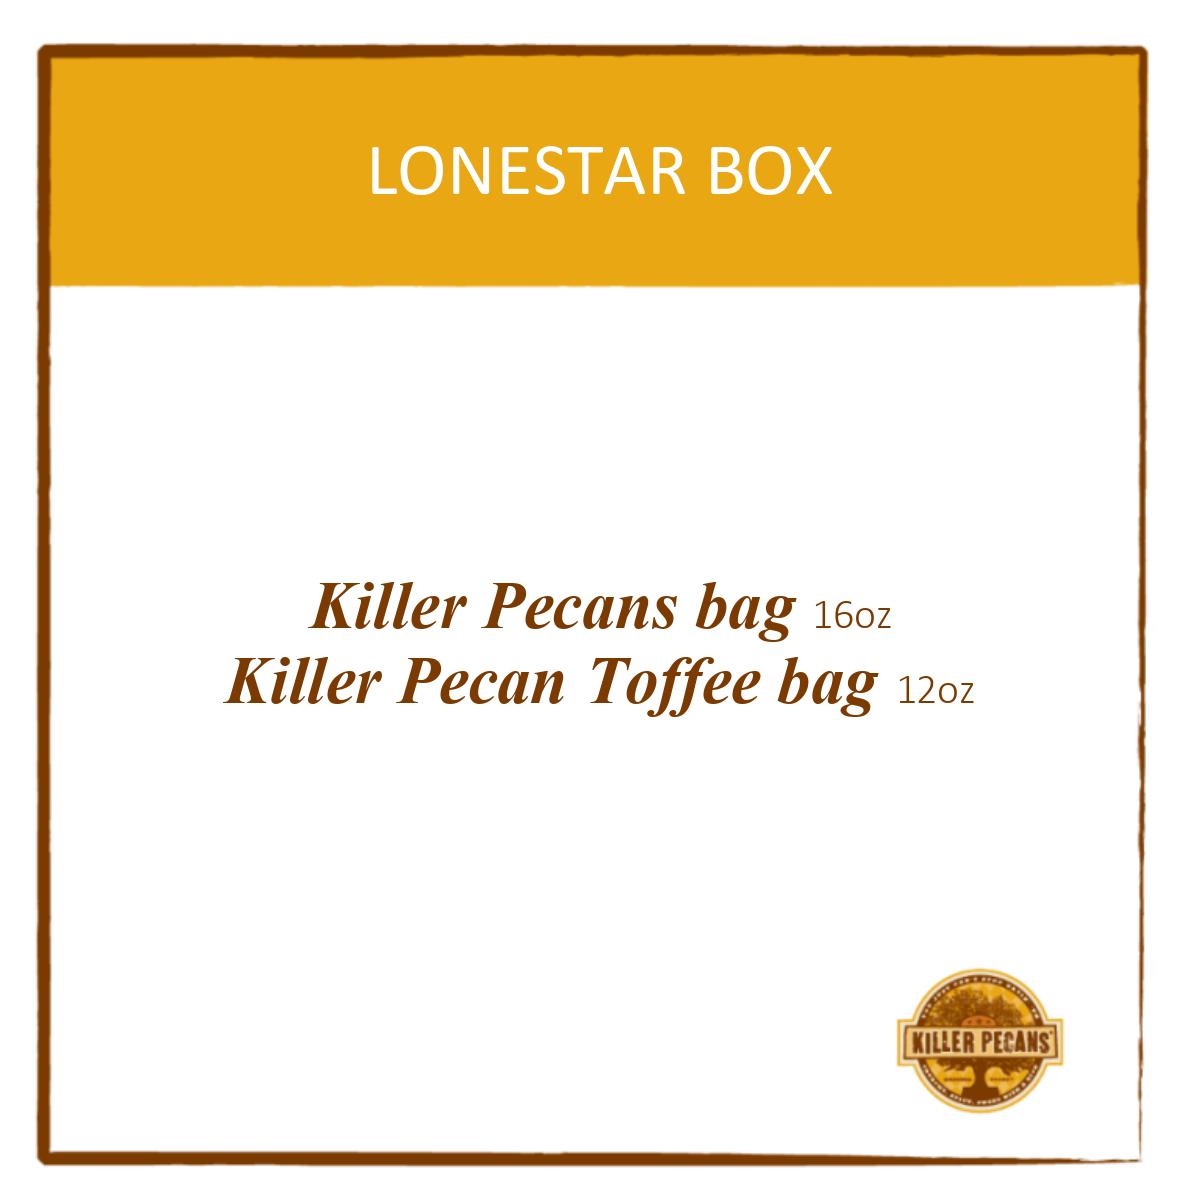 Lone Star Box